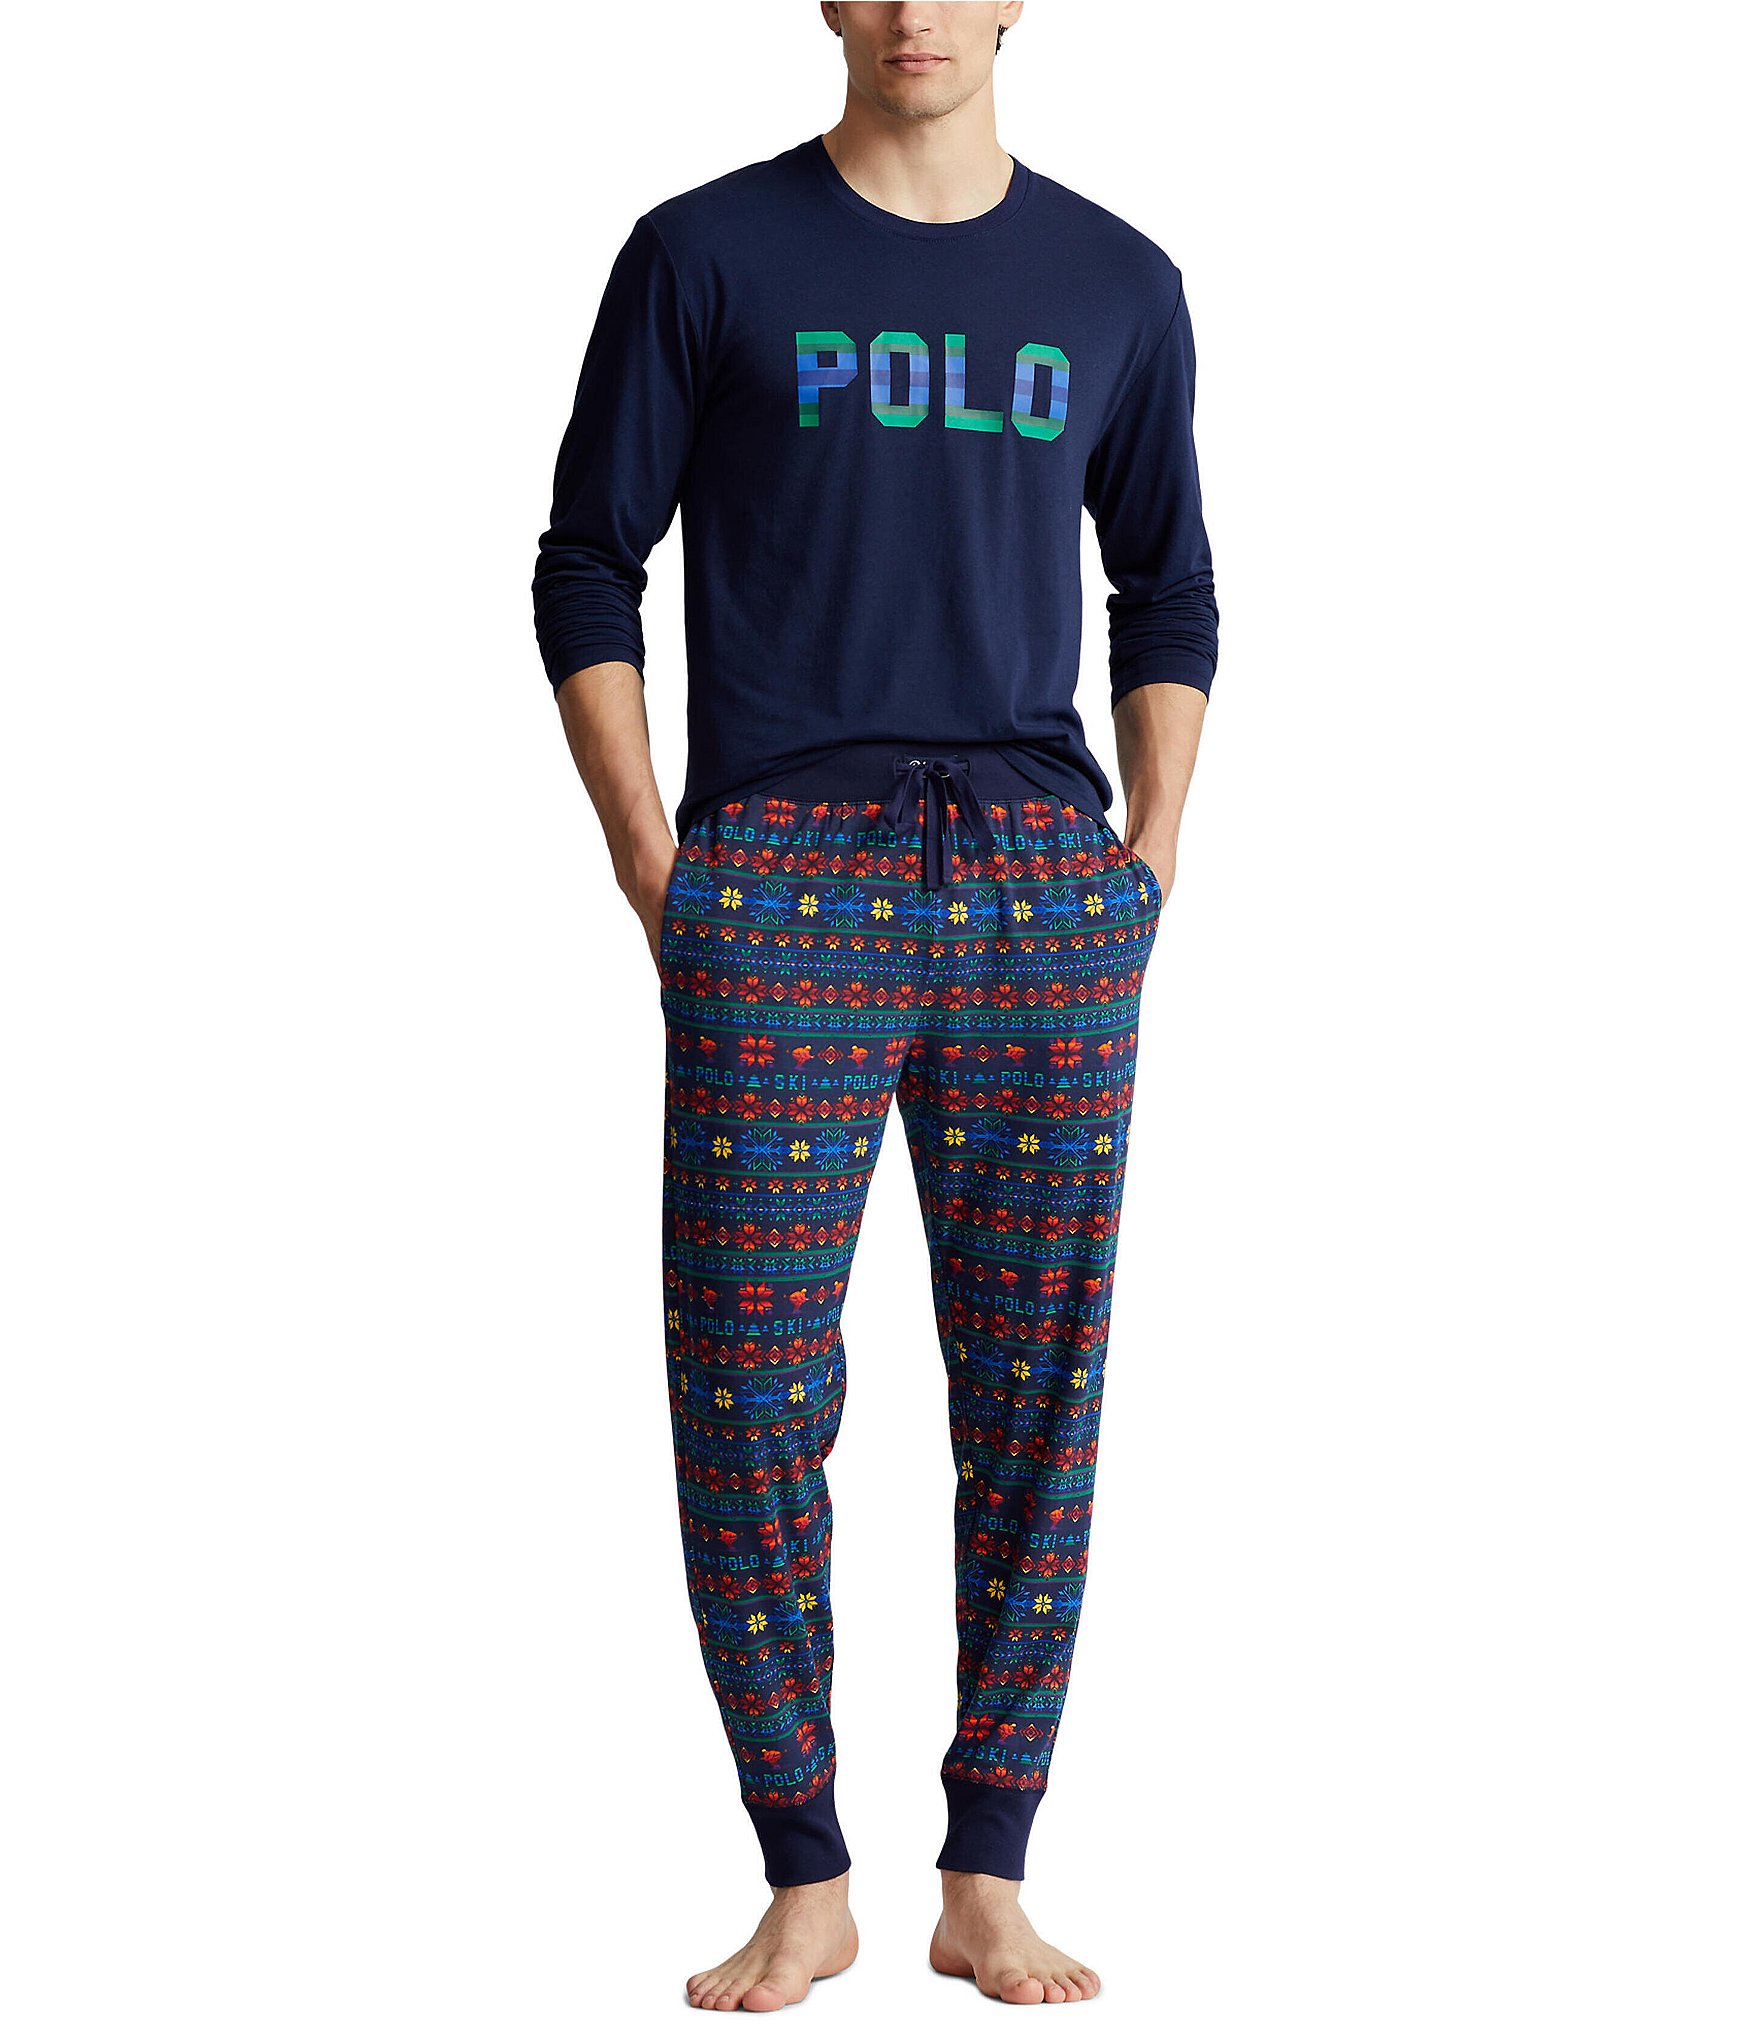 polo men: Men's Pajamas & Robes